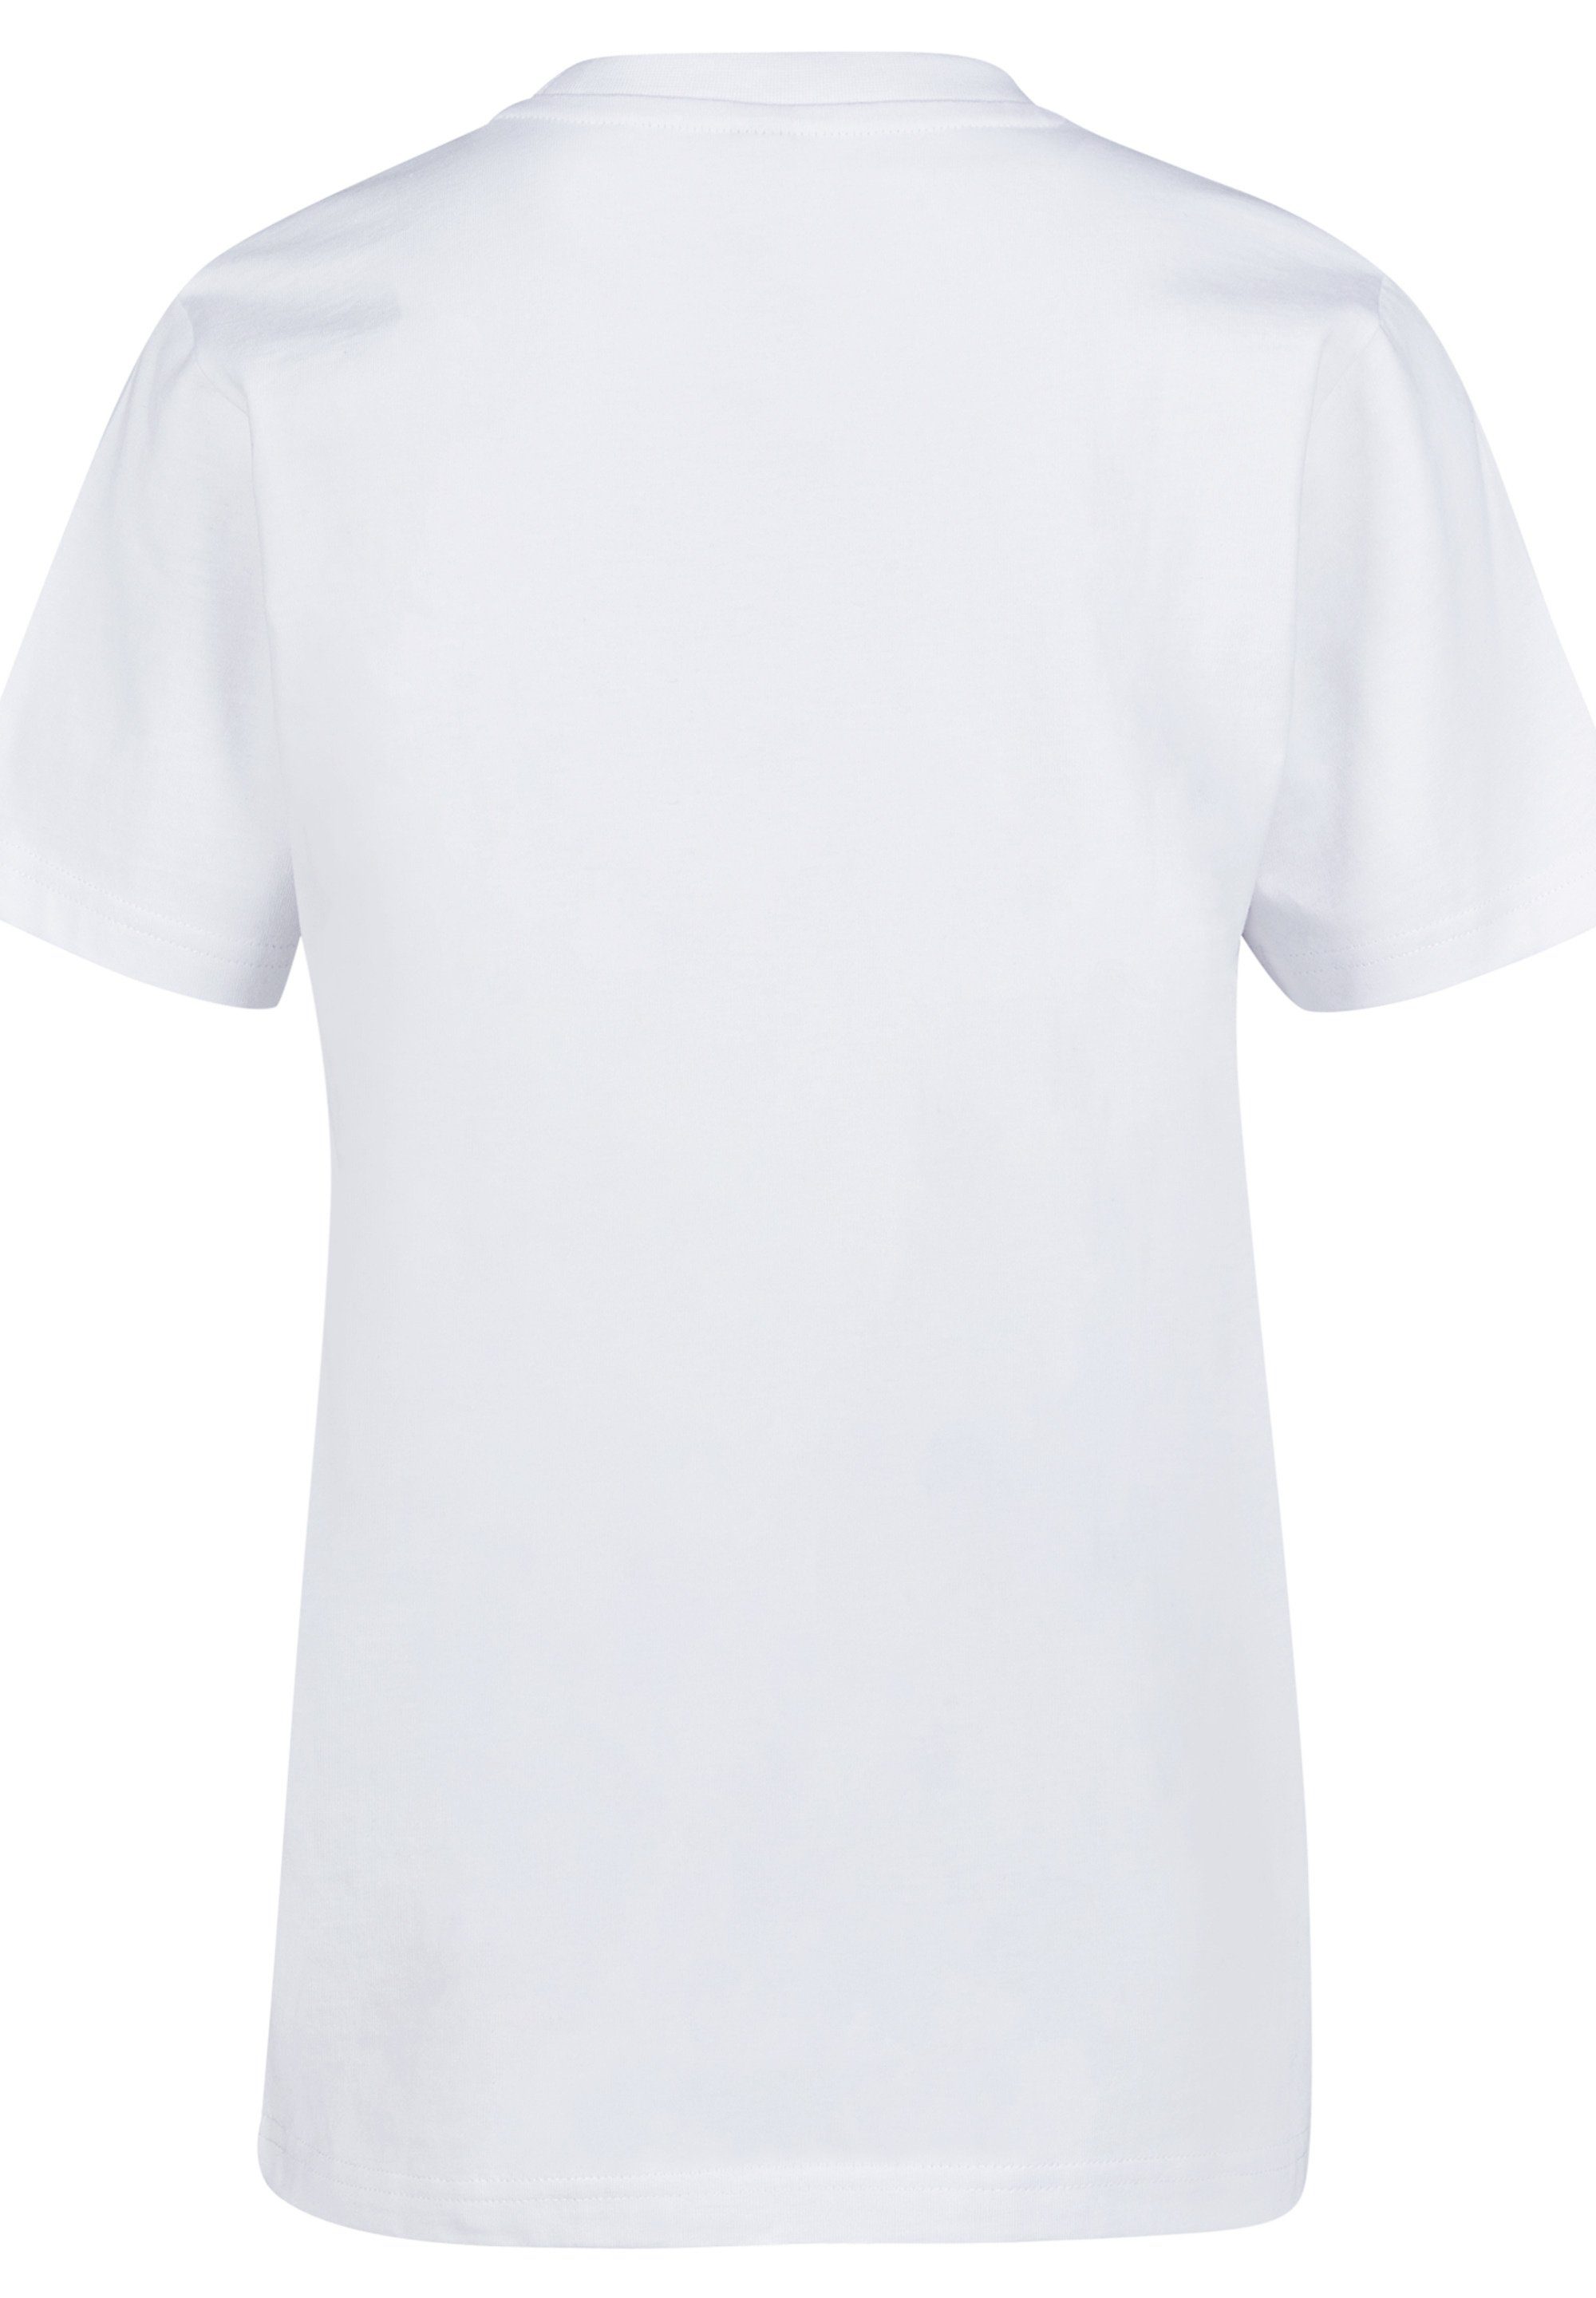 Space F4NT4STIC Classic T-Shirt NASA Shuttle Unisex Kinder,Premium White Merch,Jungen,Mädchen,Bedruckt